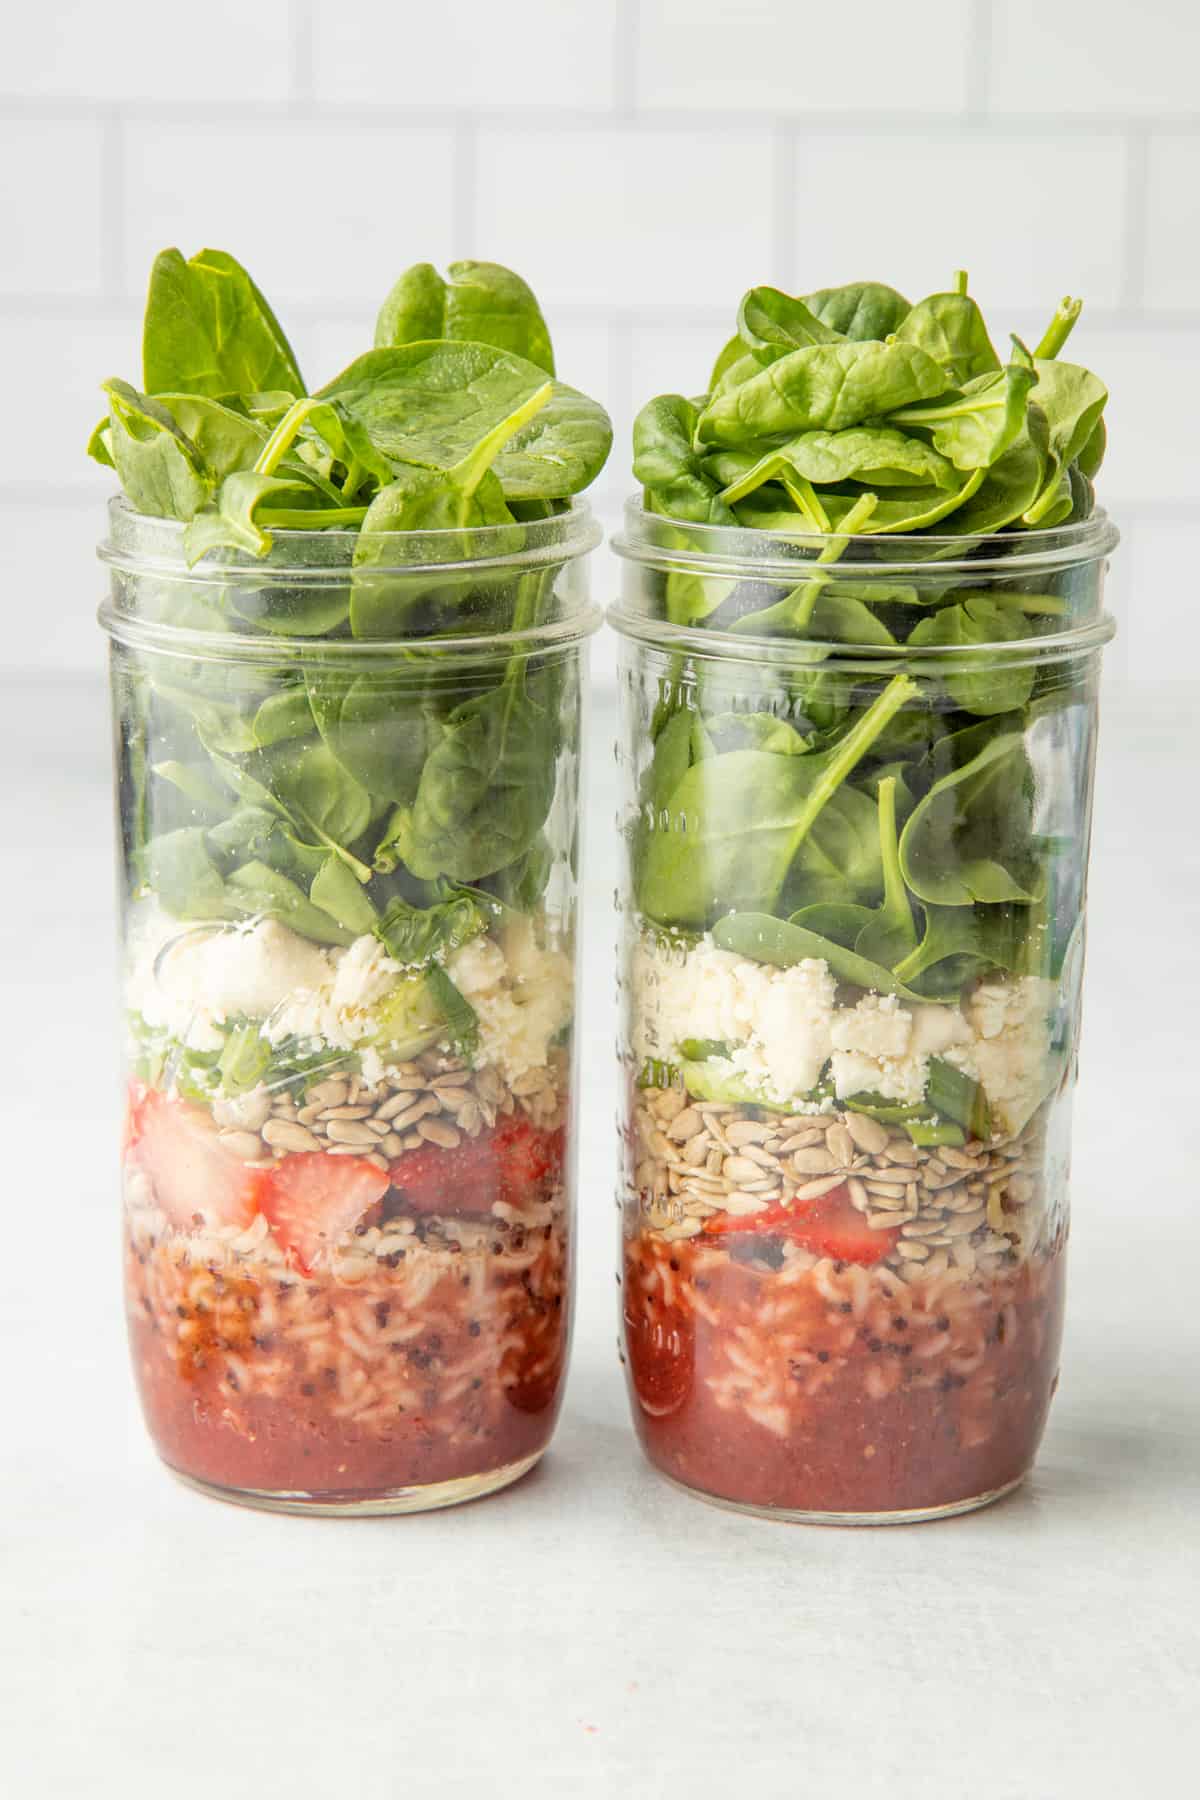 Strawberry Spinach Salad in a Jar